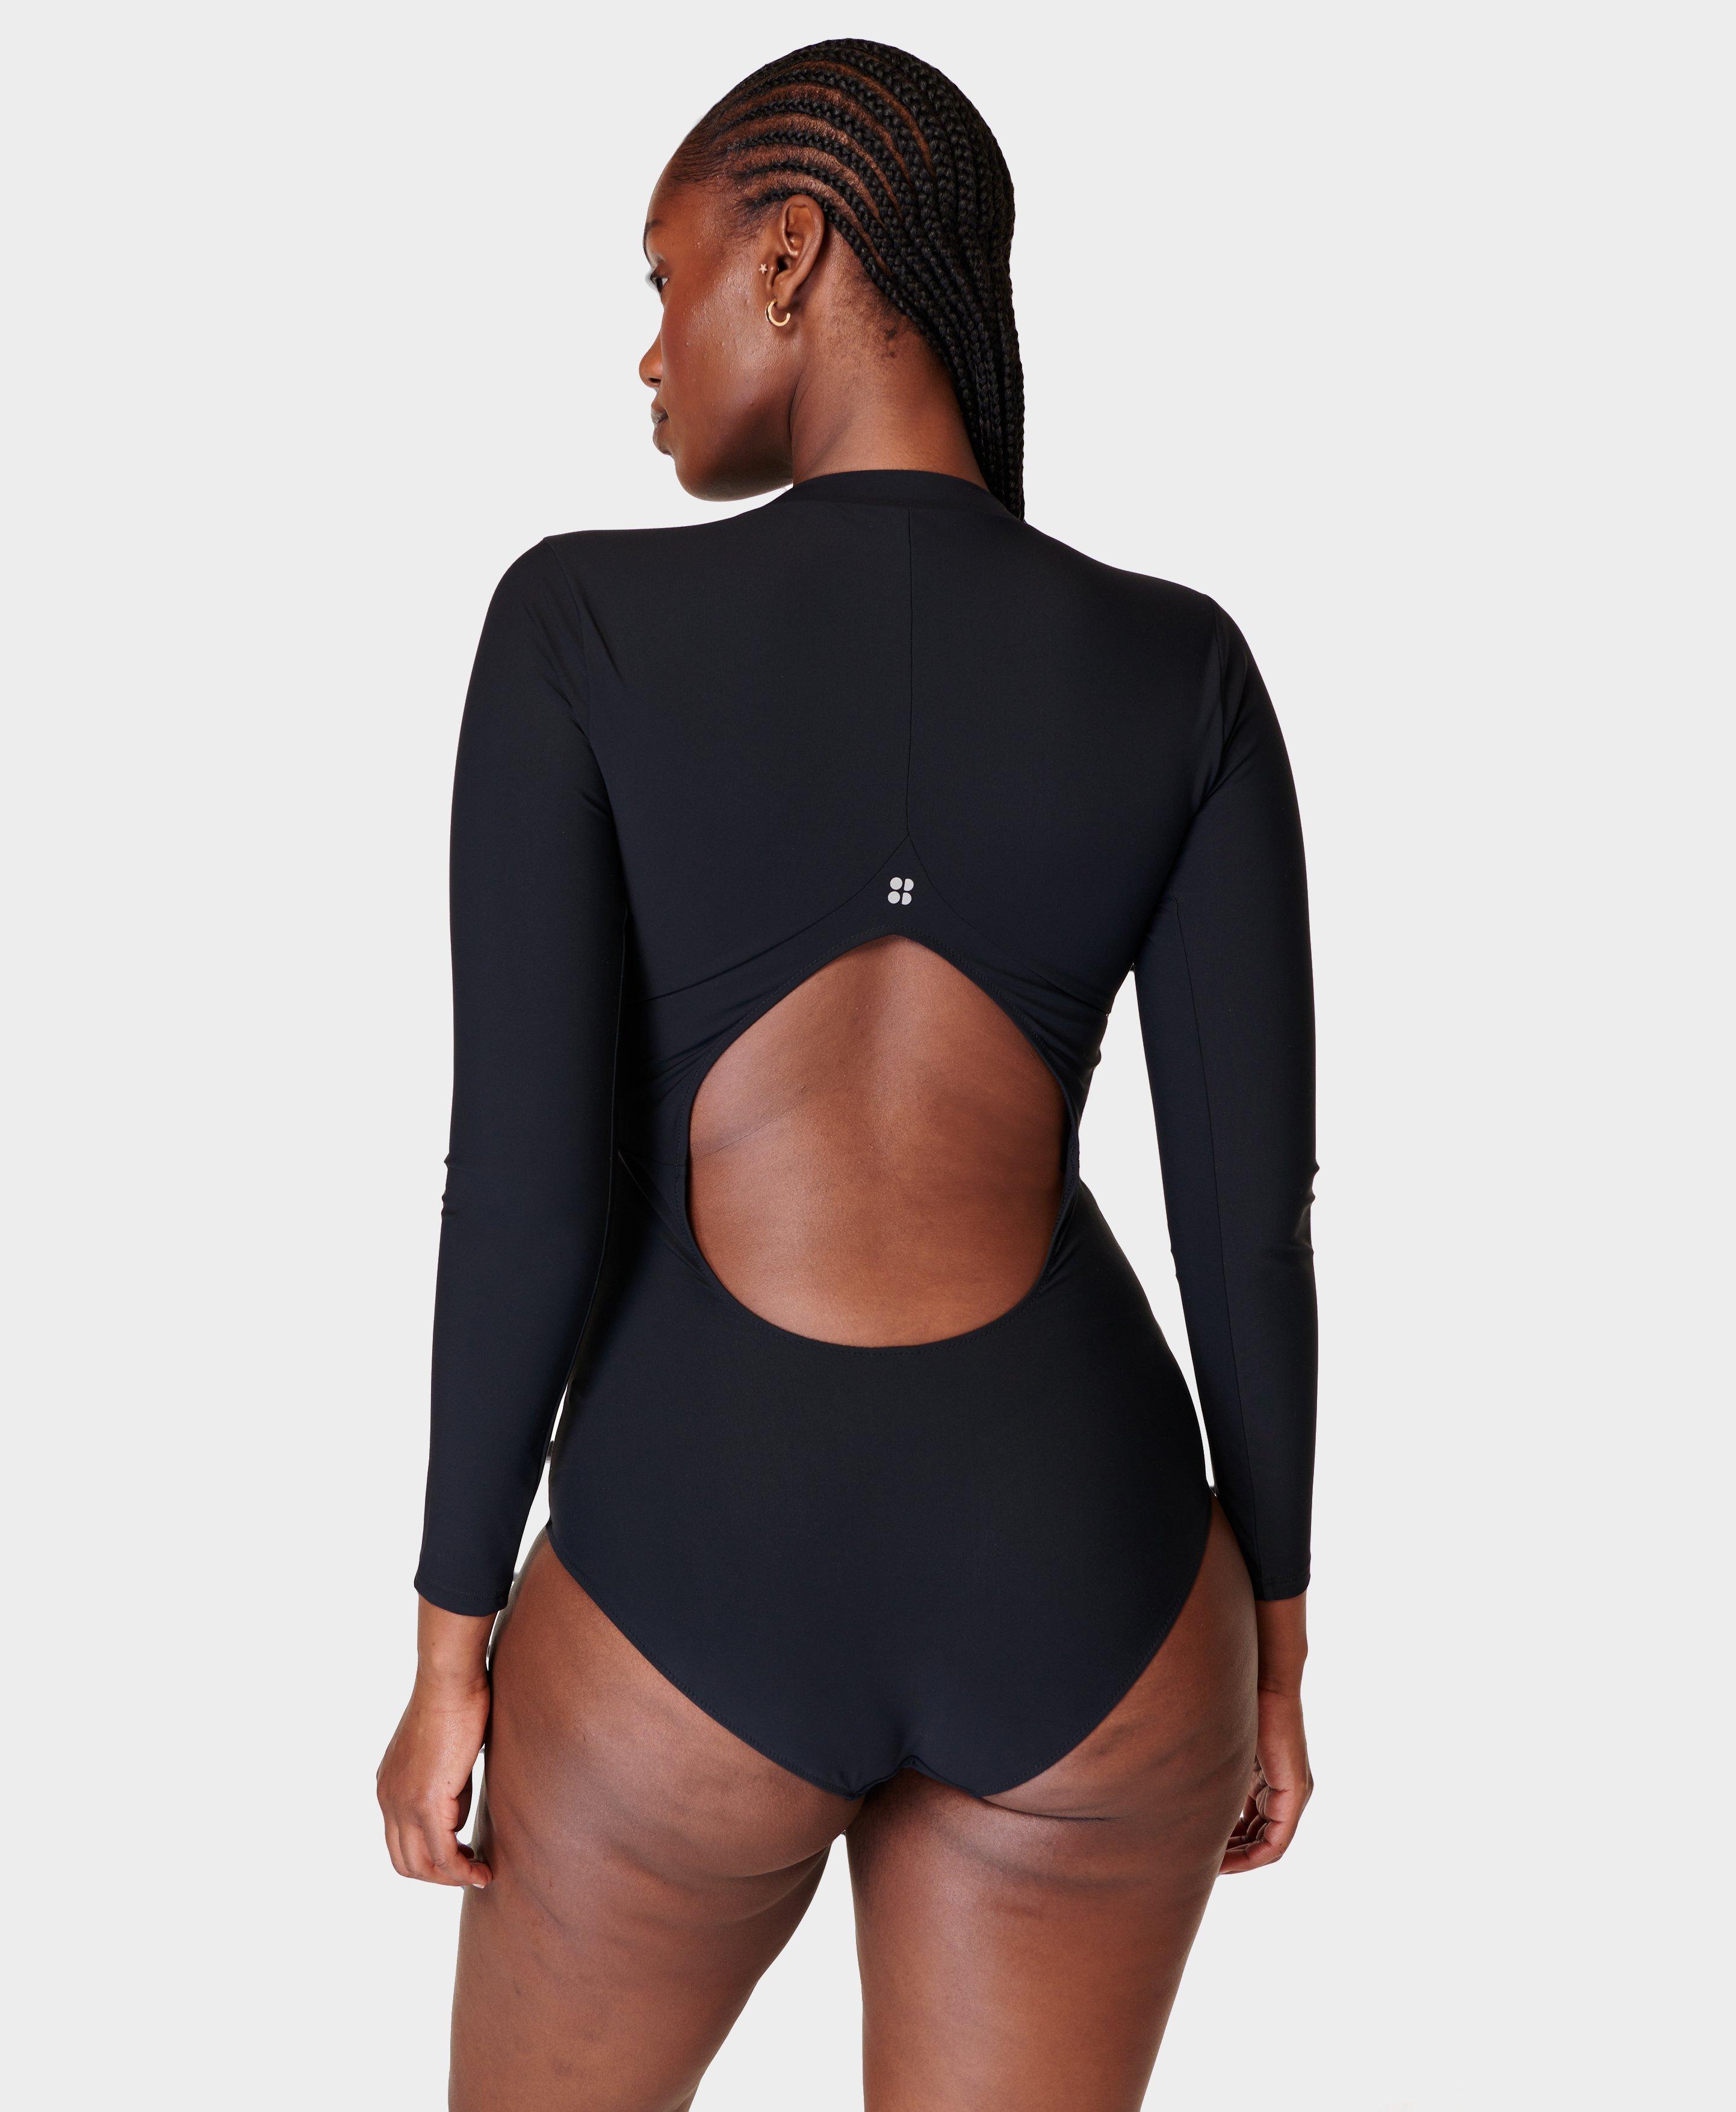 Purchase Wholesale bodysuit women. Free Returns & Net 60 Terms on